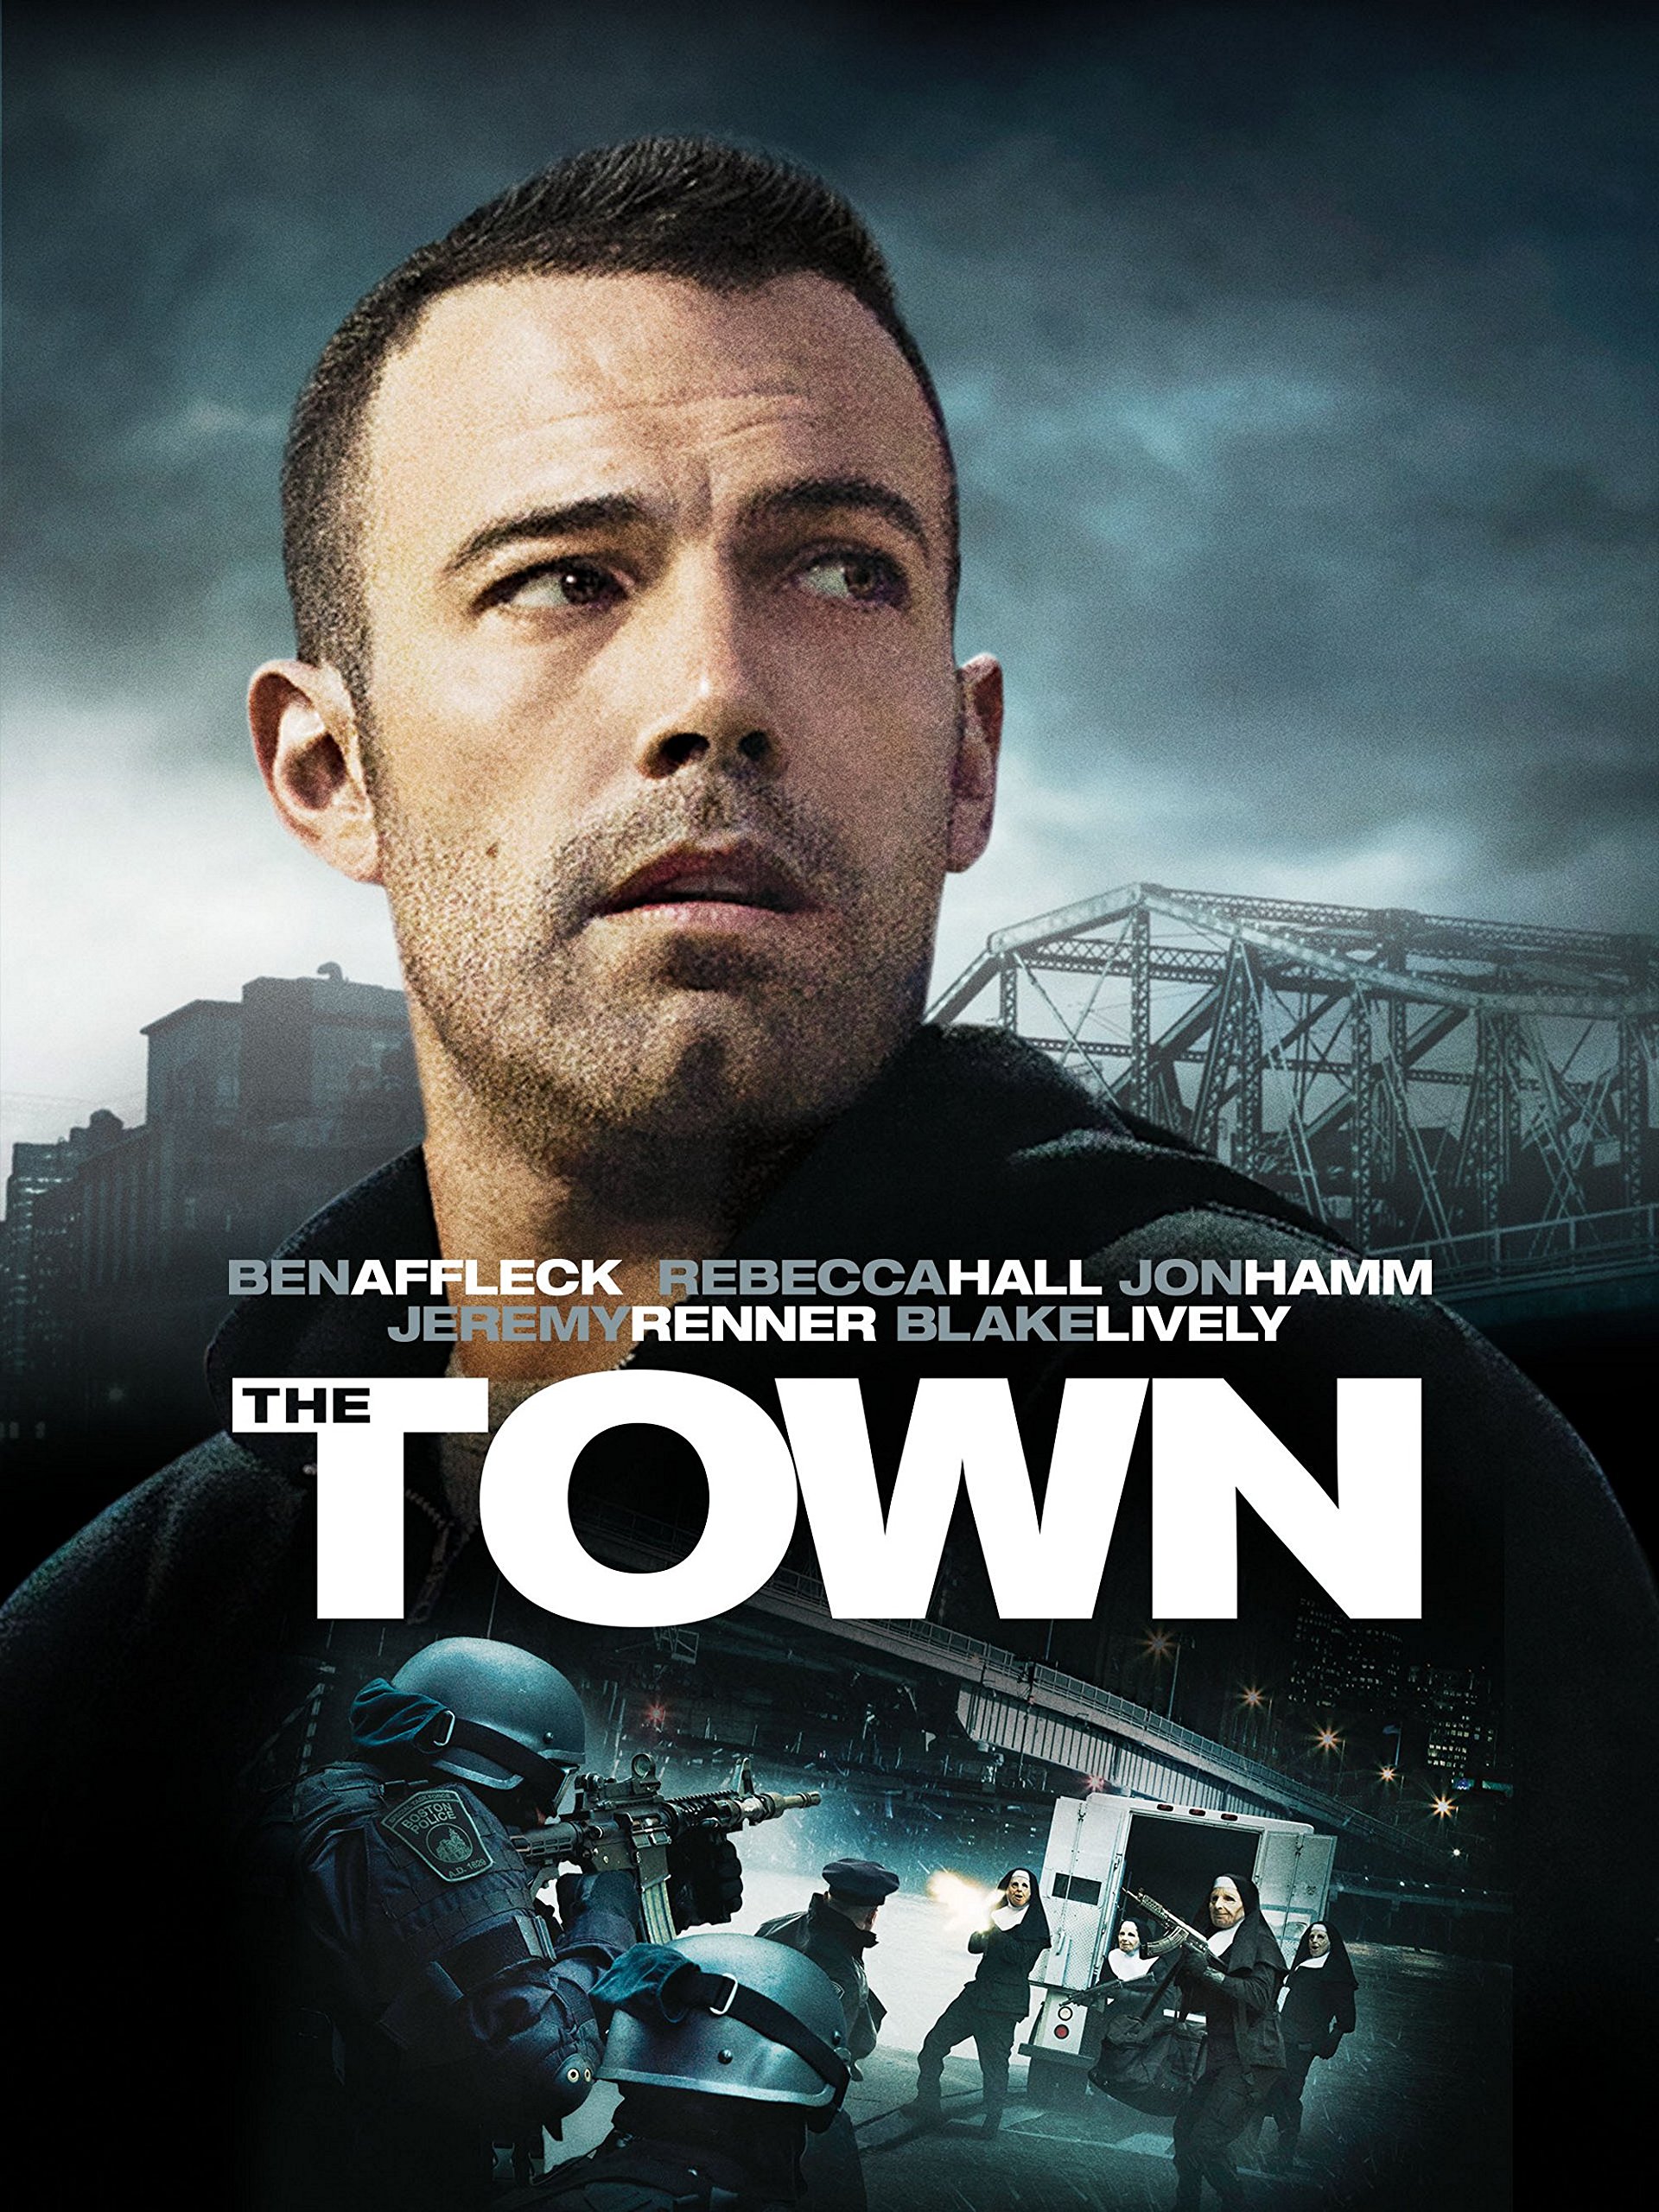 Amazon.com: The Town (2010): Ben Affleck, Rebecca Hall, Jon Hamm ...